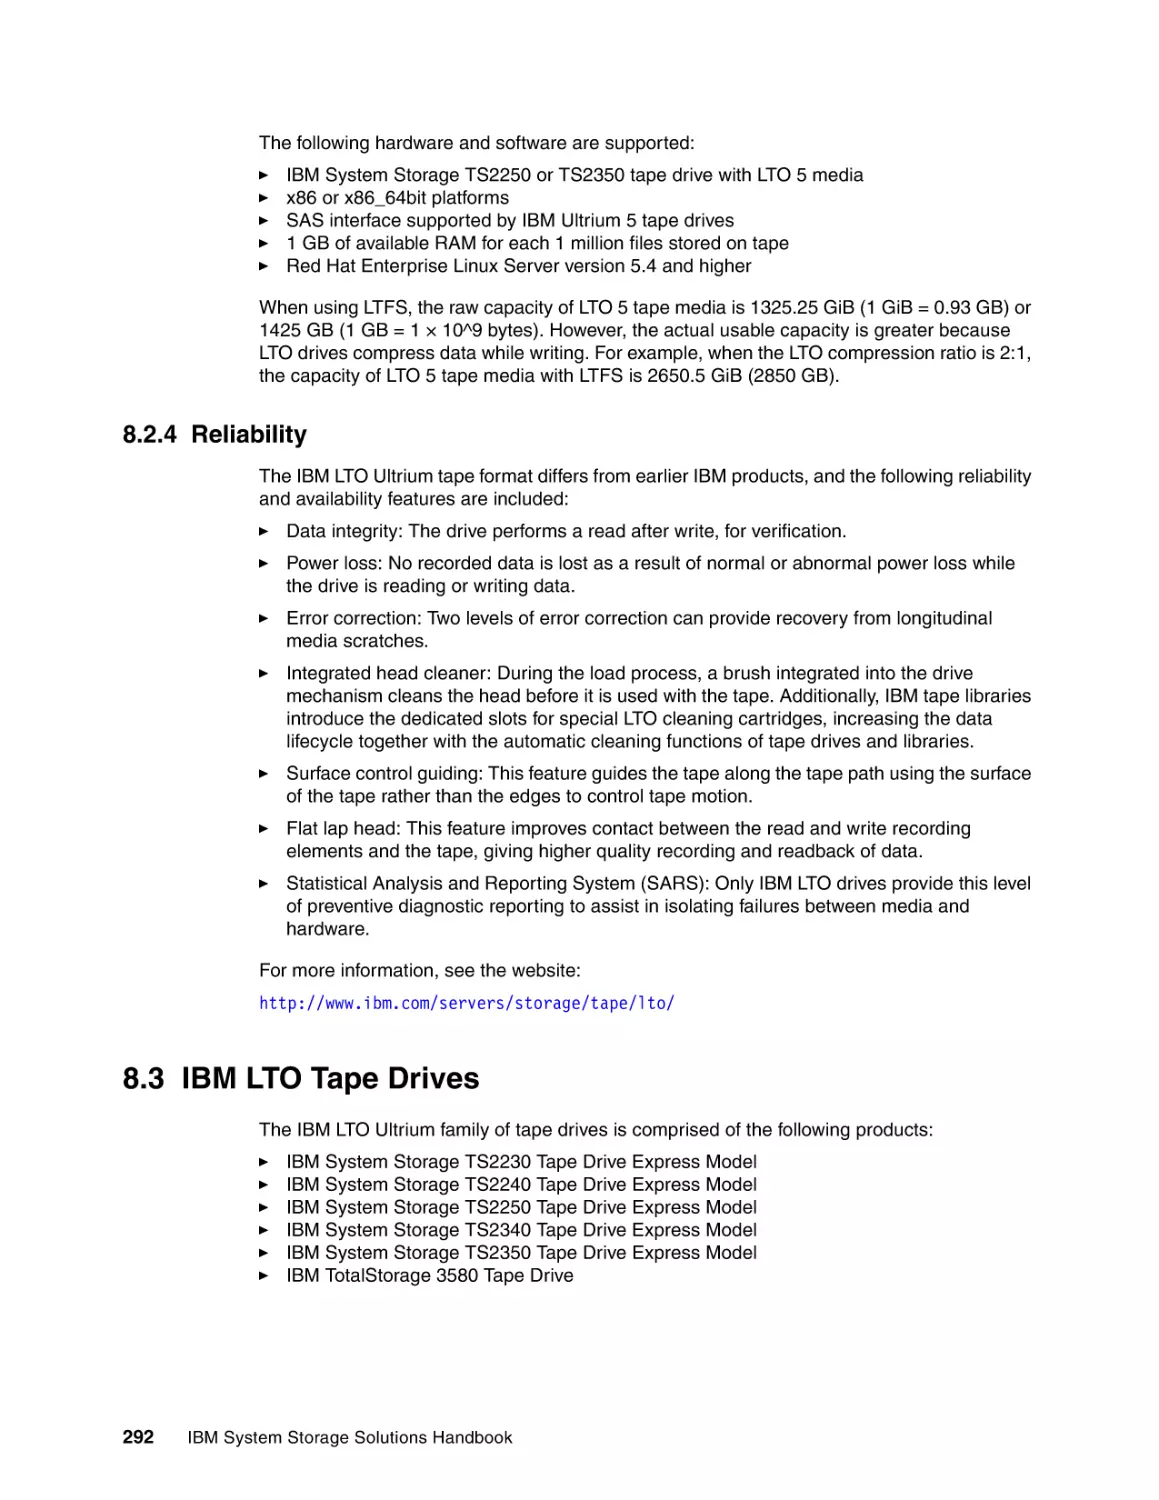 8.2.4 Reliability
8.3 IBM LTO Tape Drives